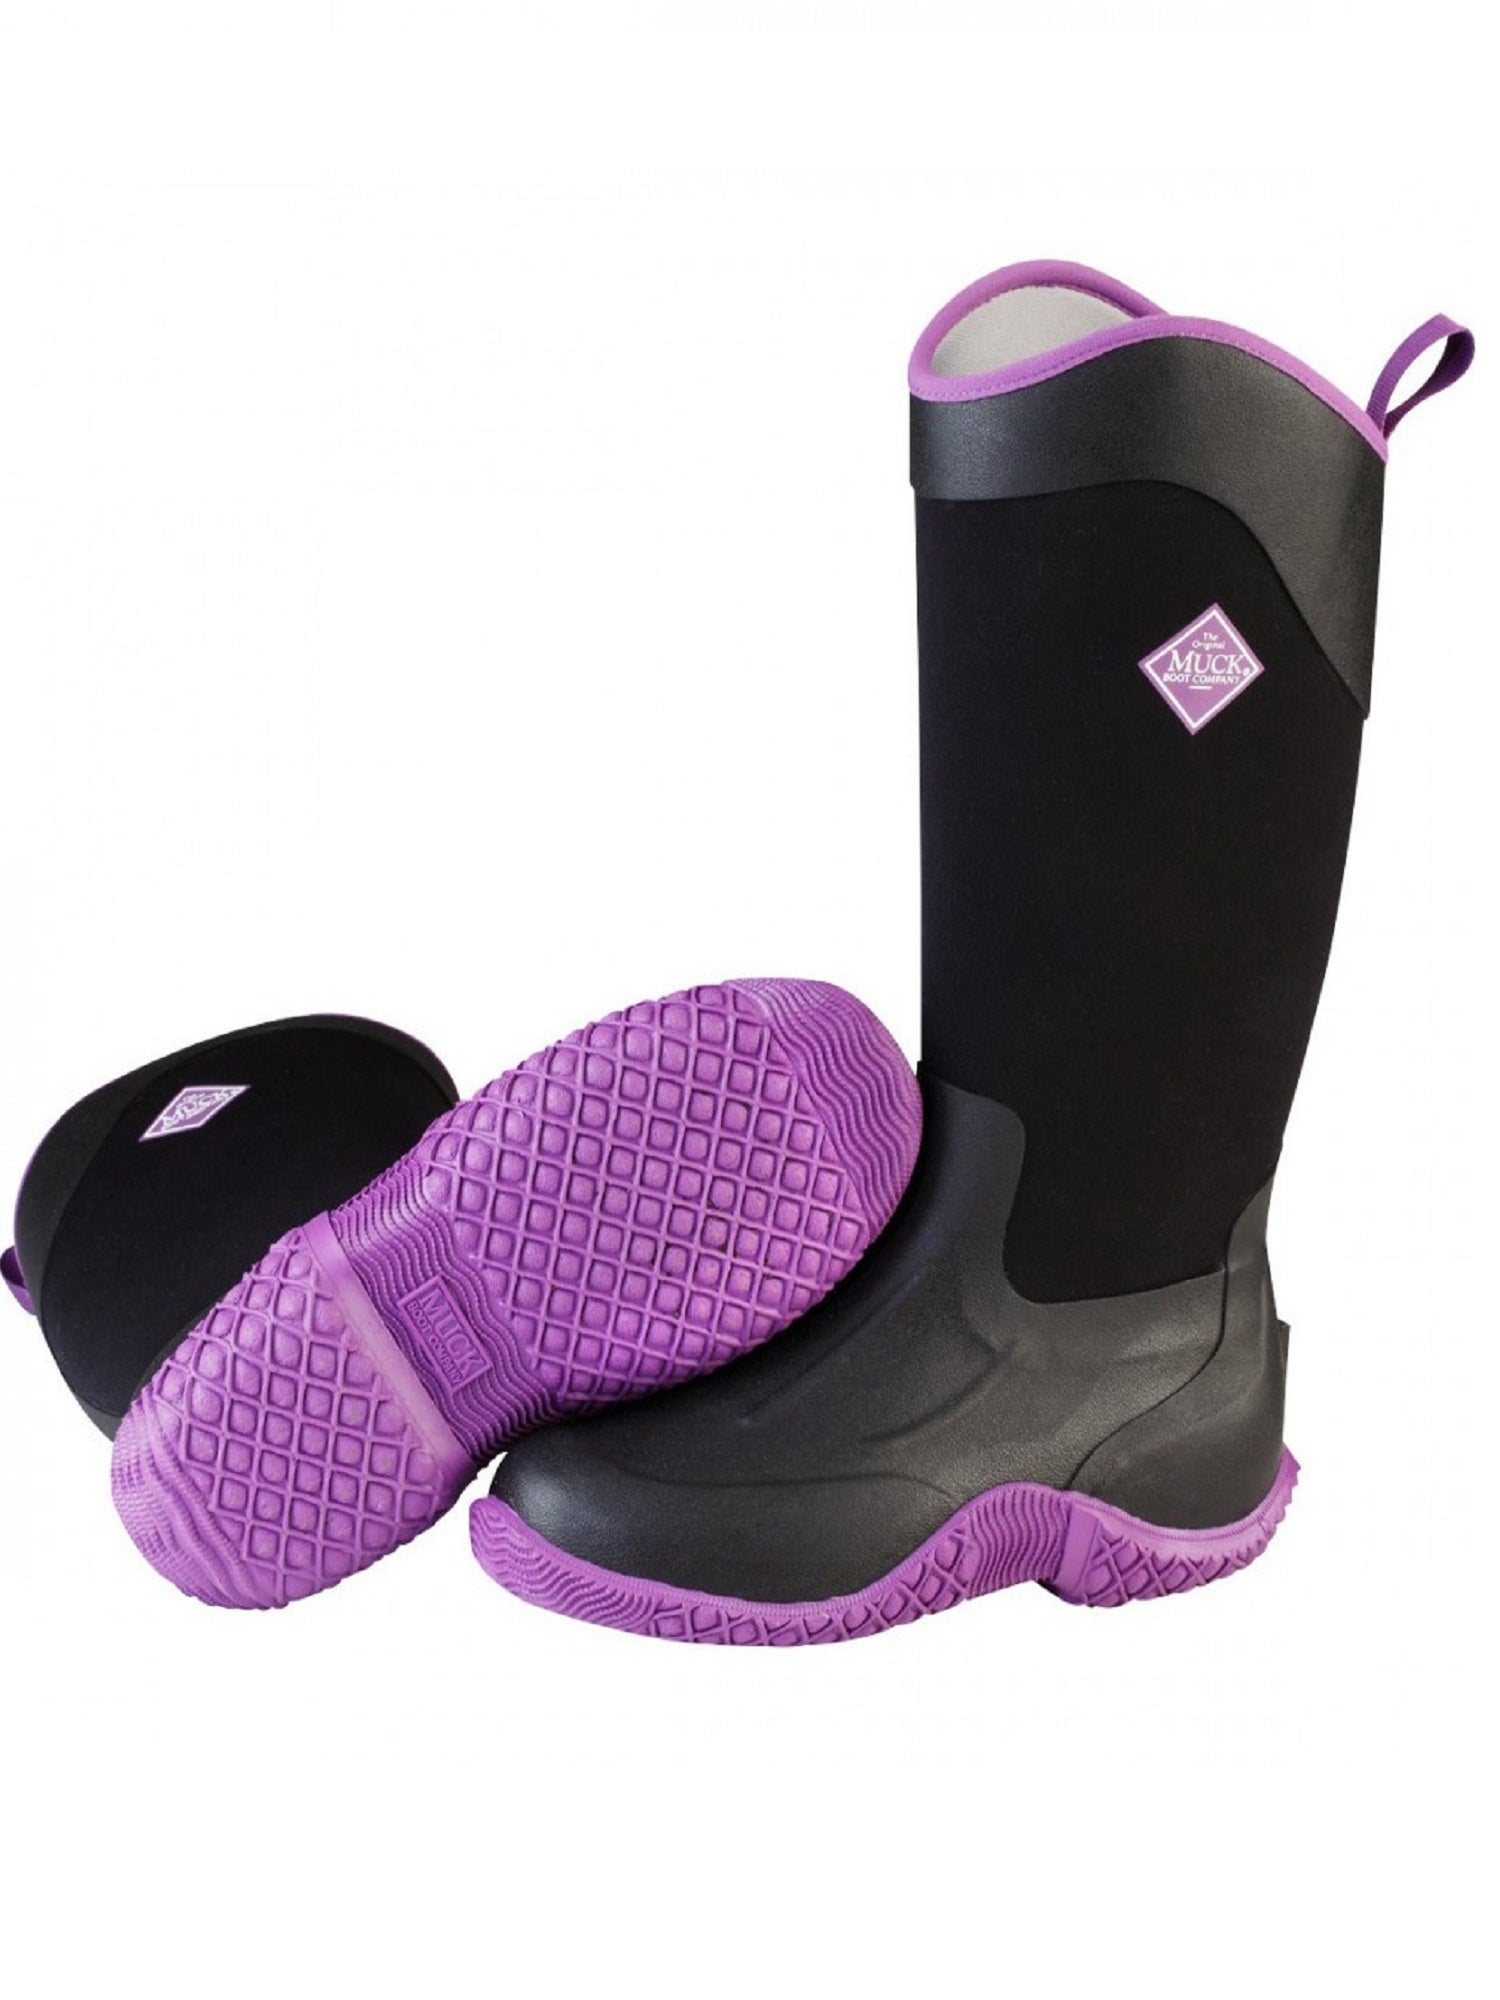 MuckBoots Women's Tack II Tall All Purpose Purple Work Boot, Size 11